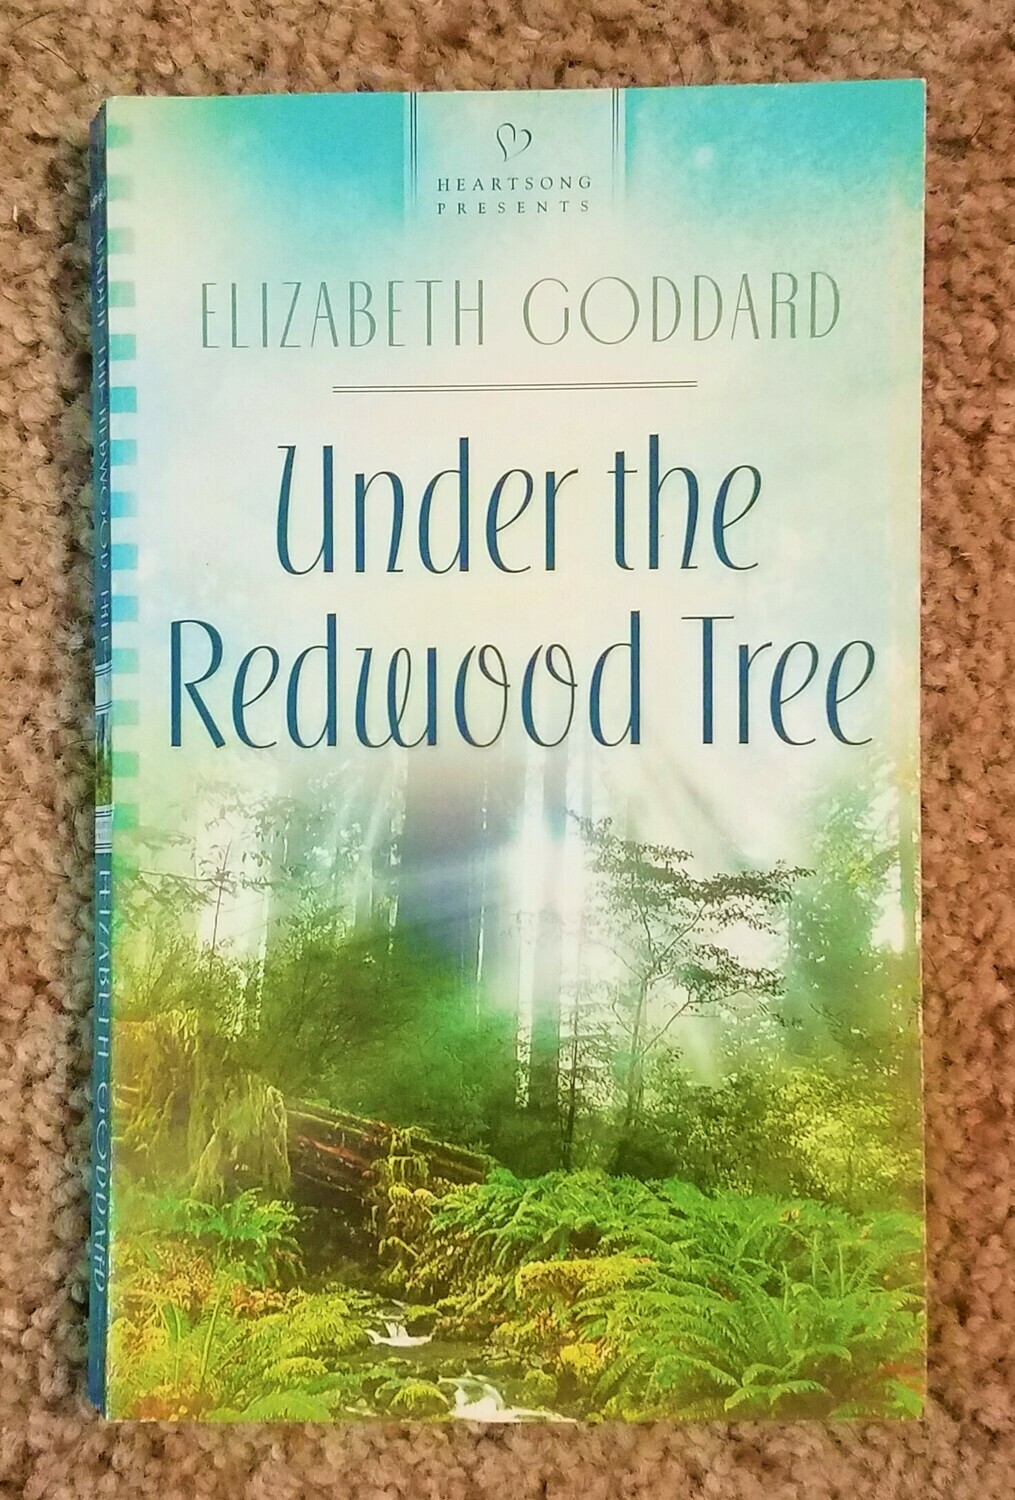 Under the Redwood Tree by Elizabeth Goddard